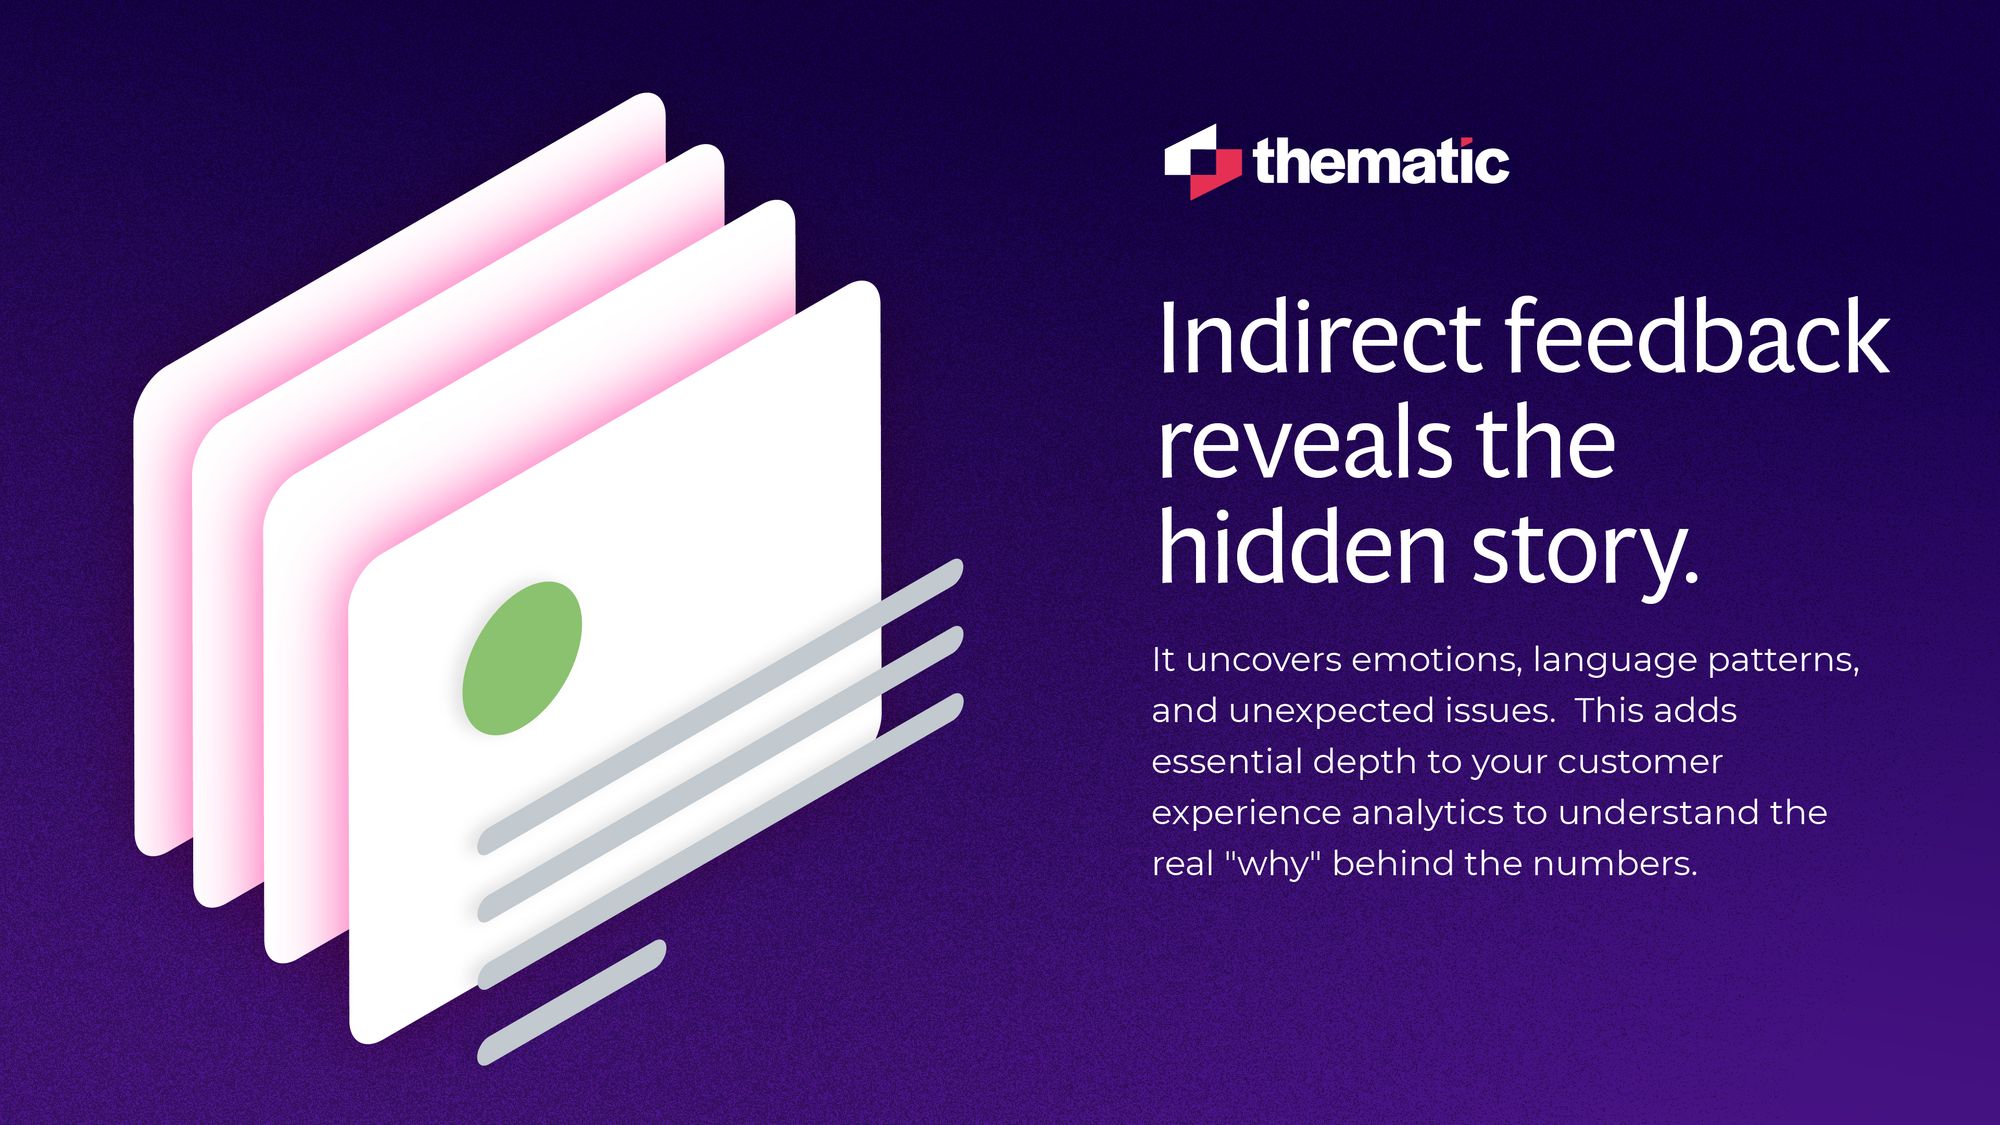 Indirect feedback reveals the hidden story